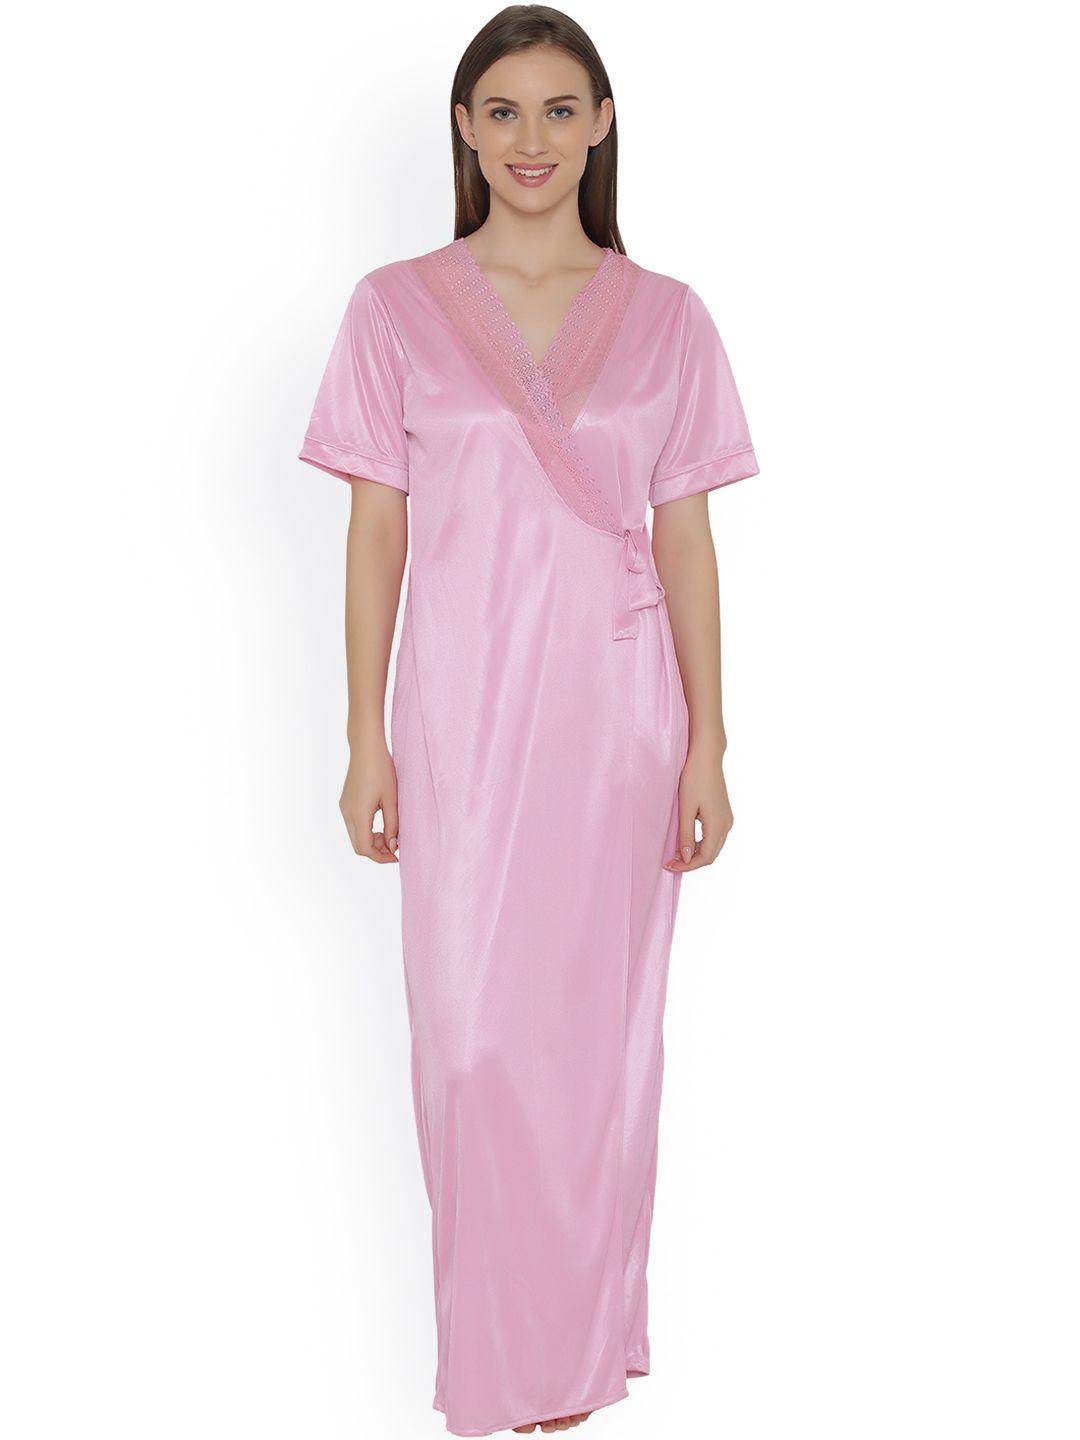 clovia-women-pink-robe-nsm283p62